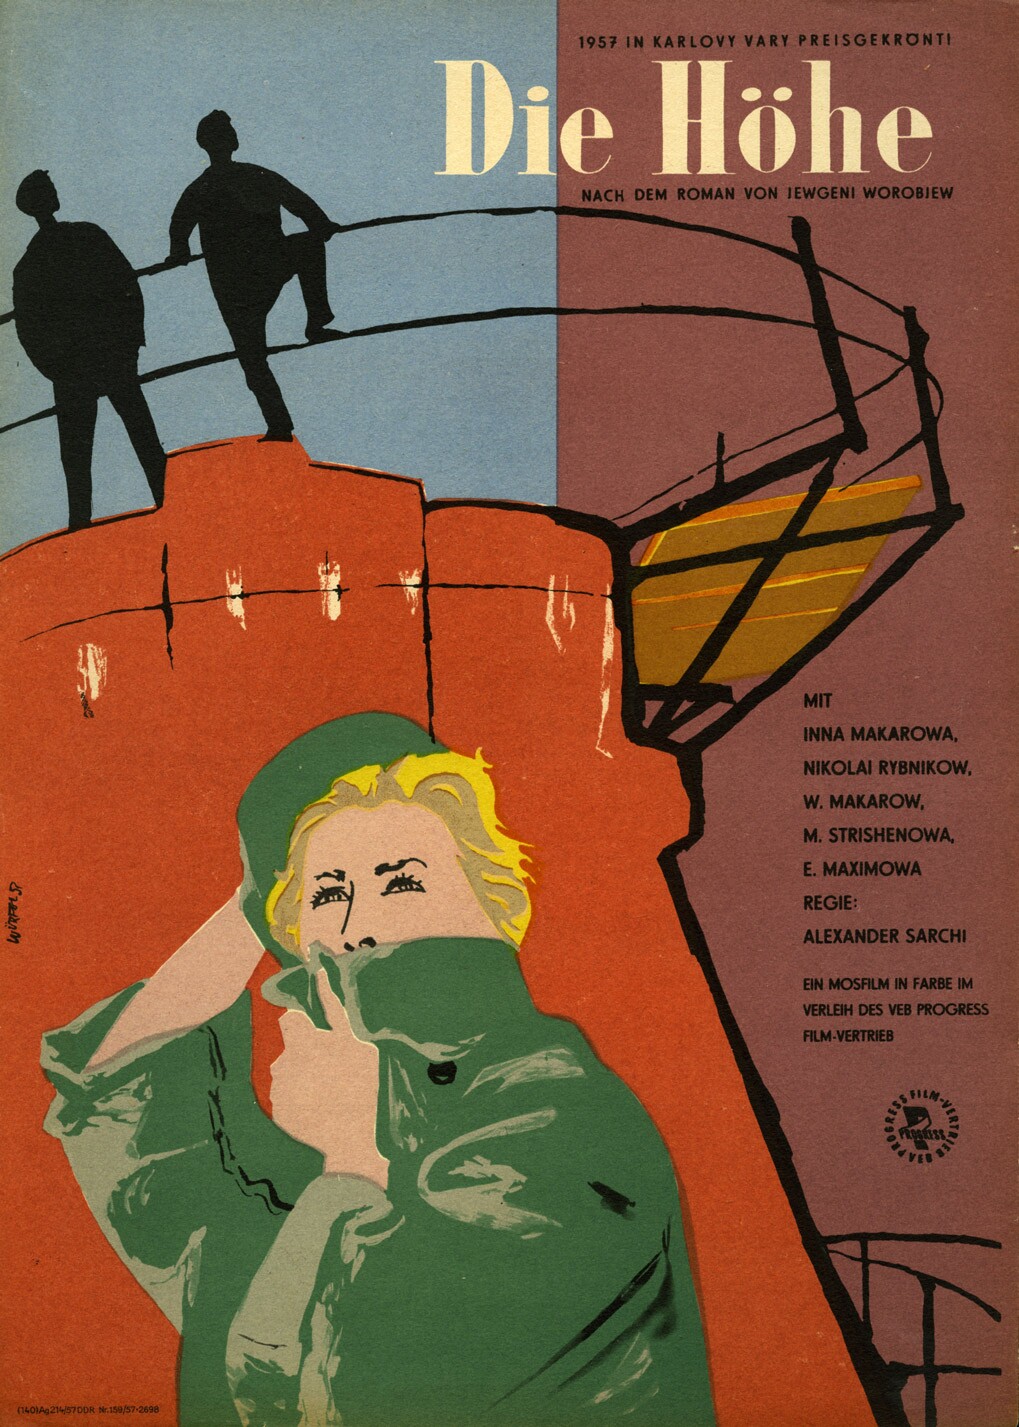 Plakat zu dem Film: Die Höhe (Filmmuseum Potsdam / DEFA-Stiftung RR-F)